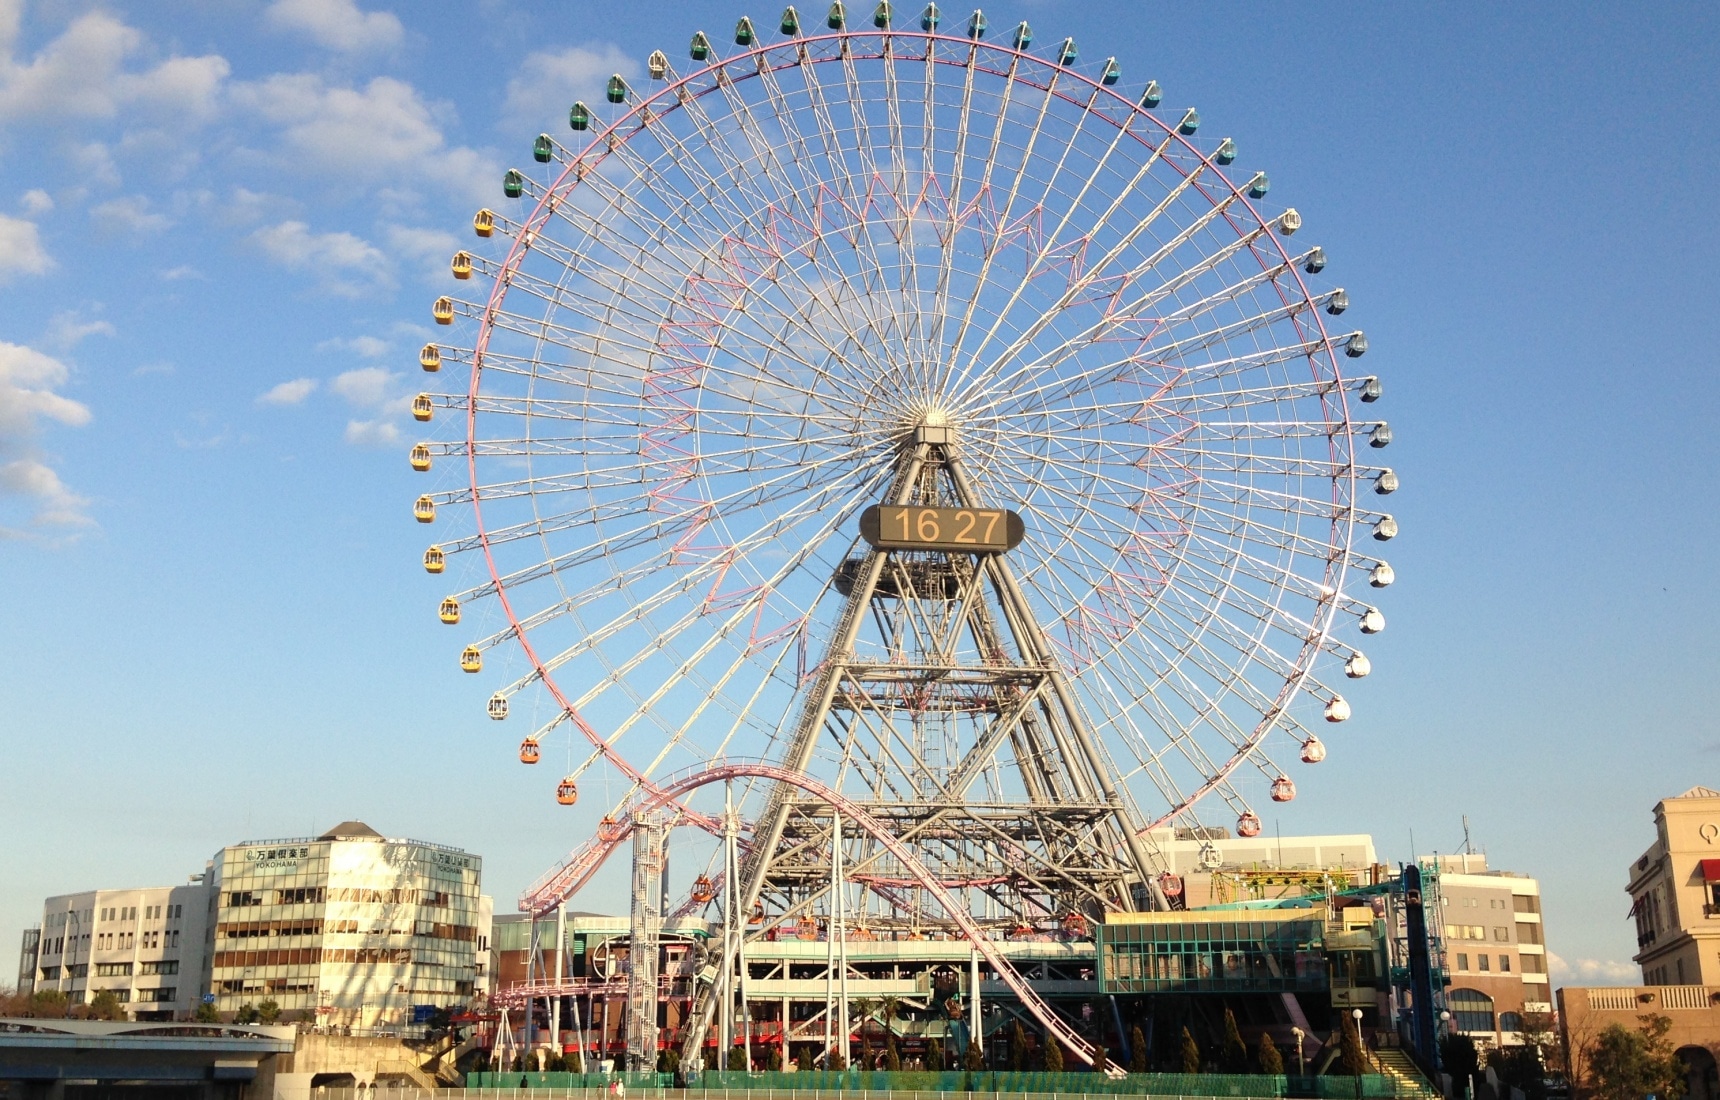 The Perfect Weekend on the Yokohama Waterfront